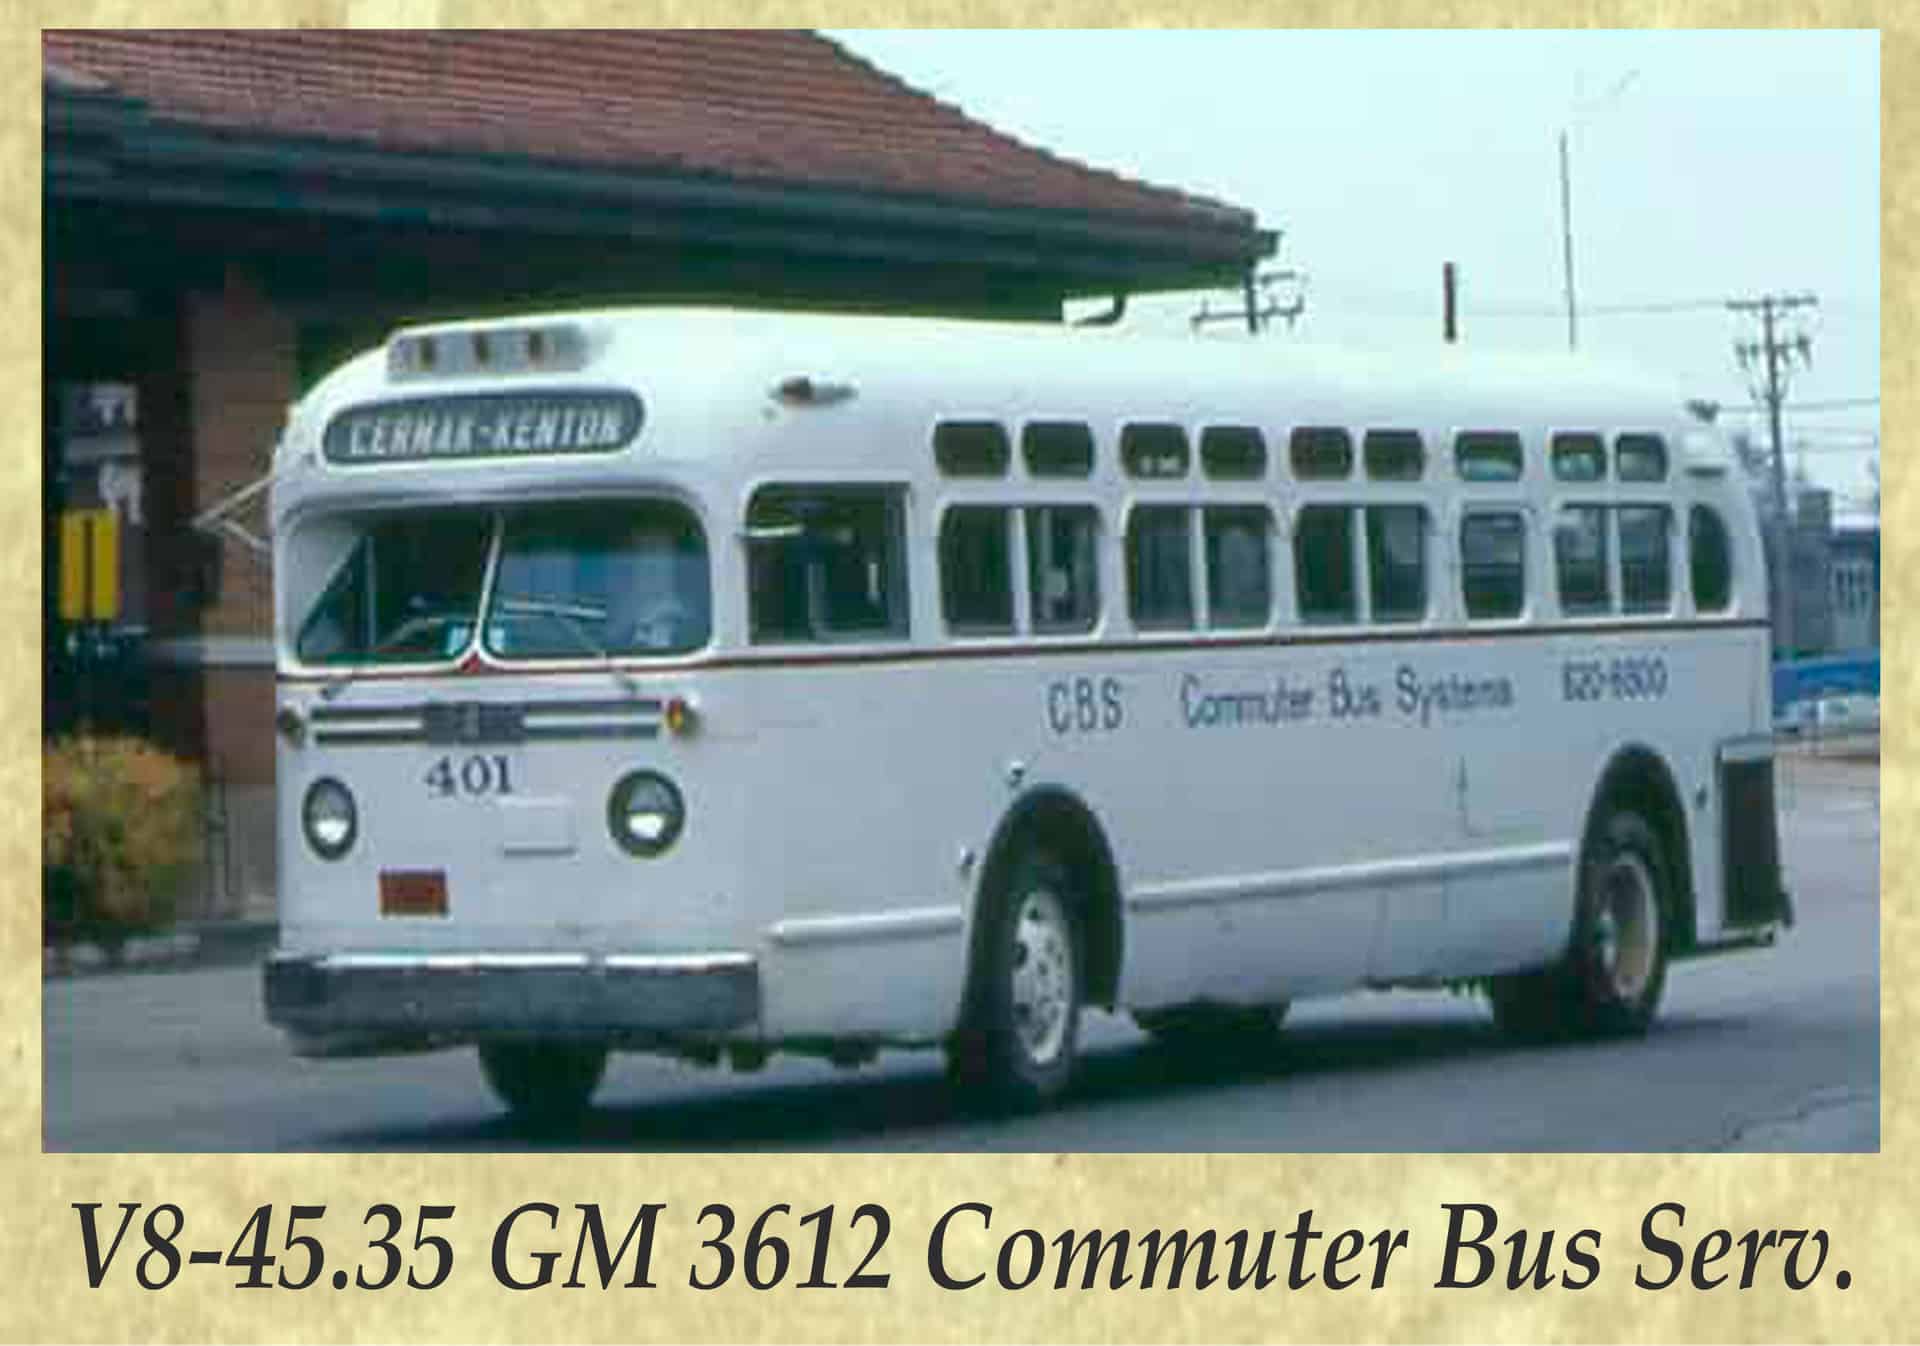 V8-45.35 GM 3612 Commuter Bus Serv.